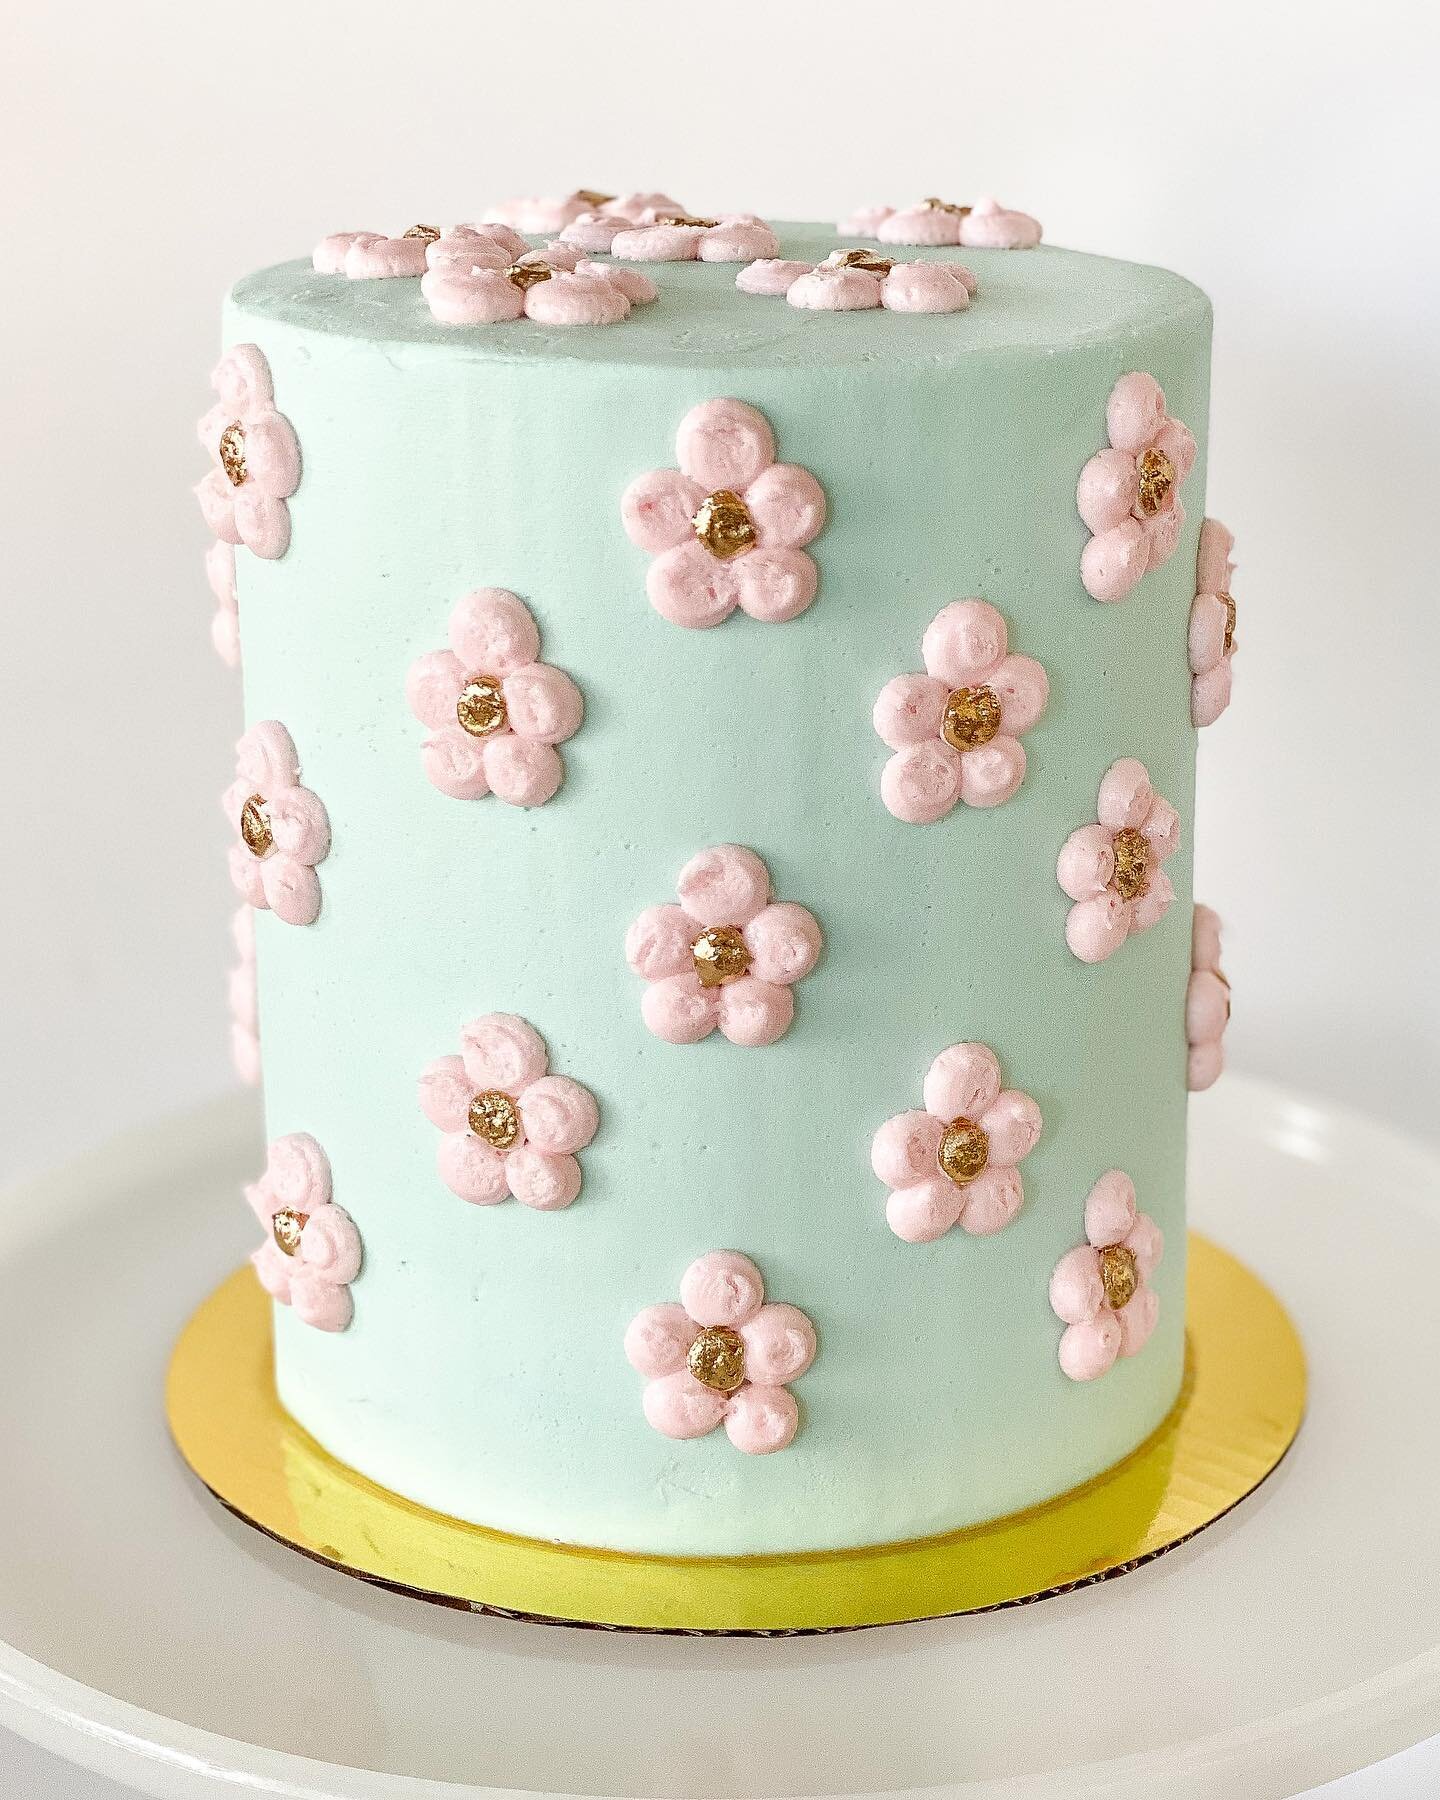 Sweet little daisy cake 🌼💕
.
.
.
.
.
#cakesofinstagram #cakeart #cakeinspo #cakesdaily #cake #instacake #cakegoals  #dailyfoodfeed #cakestyle #caketrends #cakeoftheday #cakedecorating #buzzfeed #cakedesign #eeeeeats #cakegram #birthdaycake #daisyca